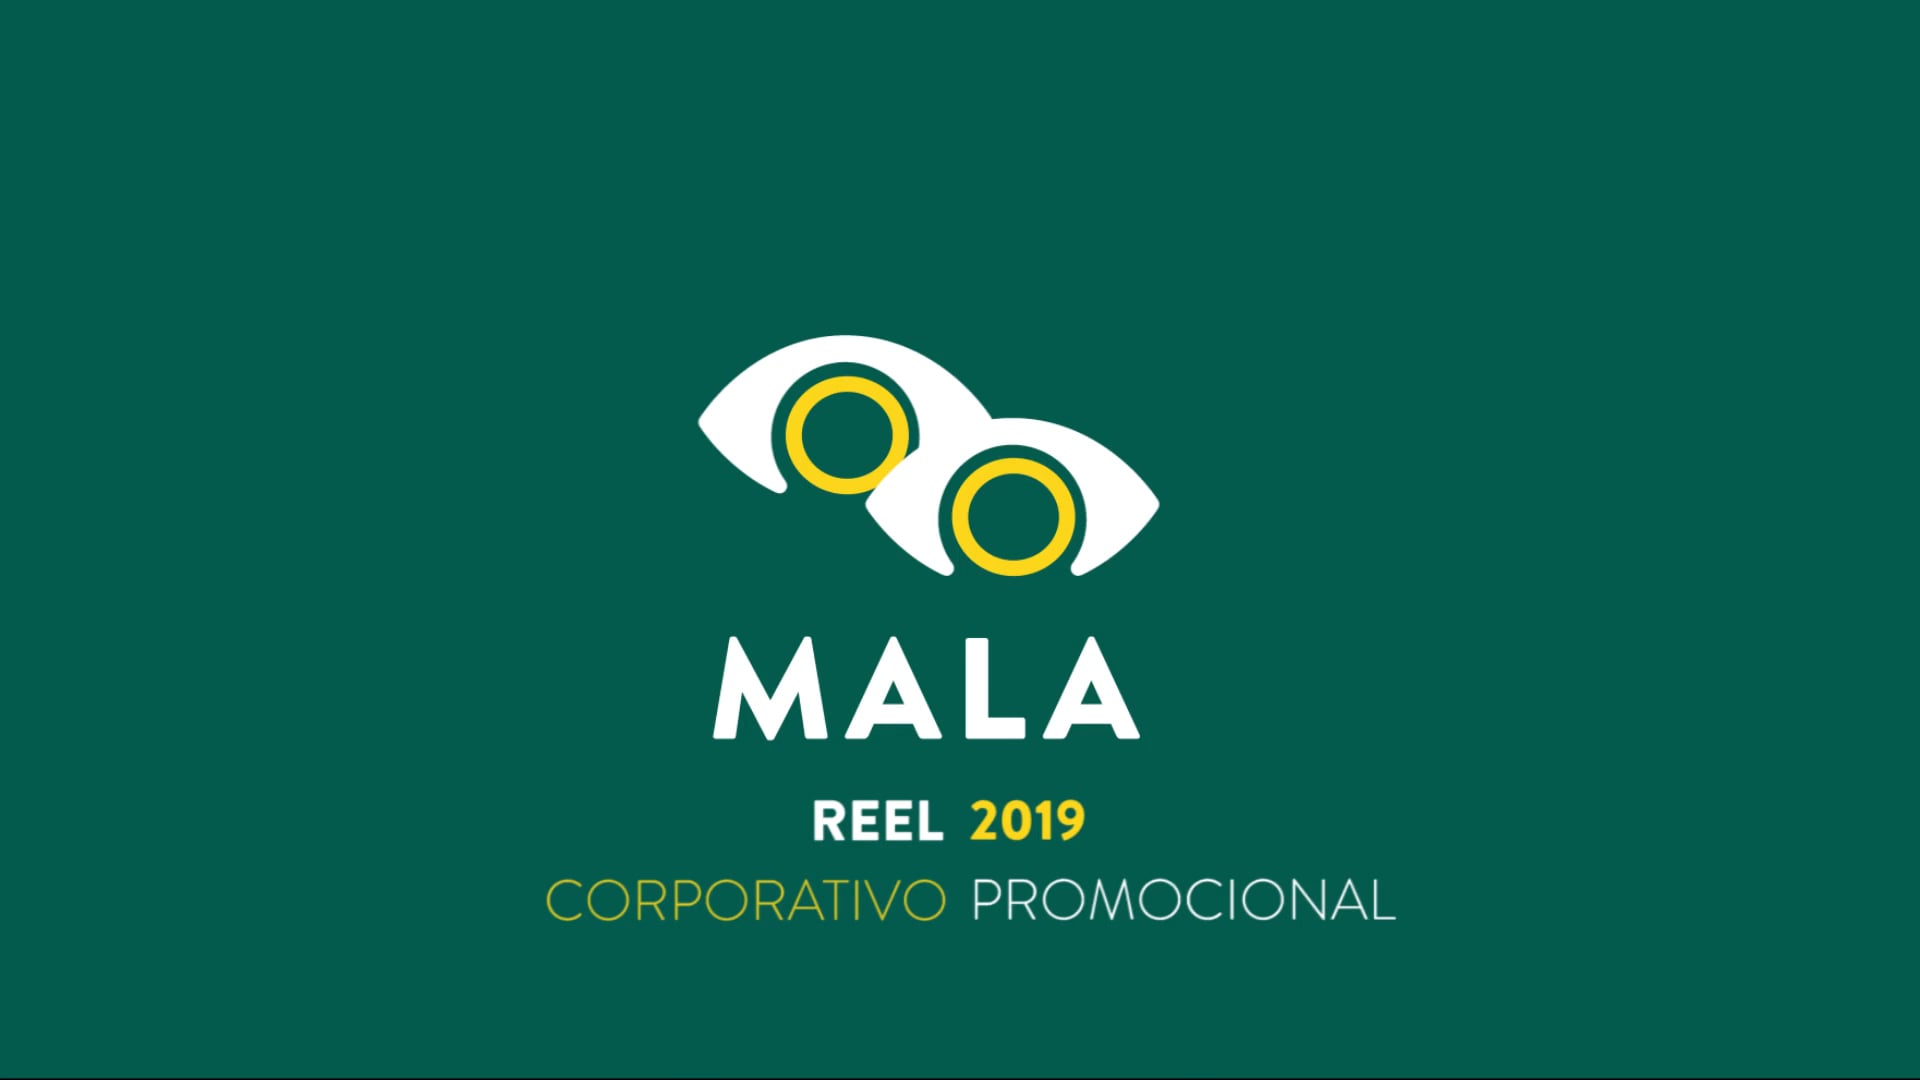 Reel 2019 I MALA Films - CORPORATIVO / PROMOCIONAL